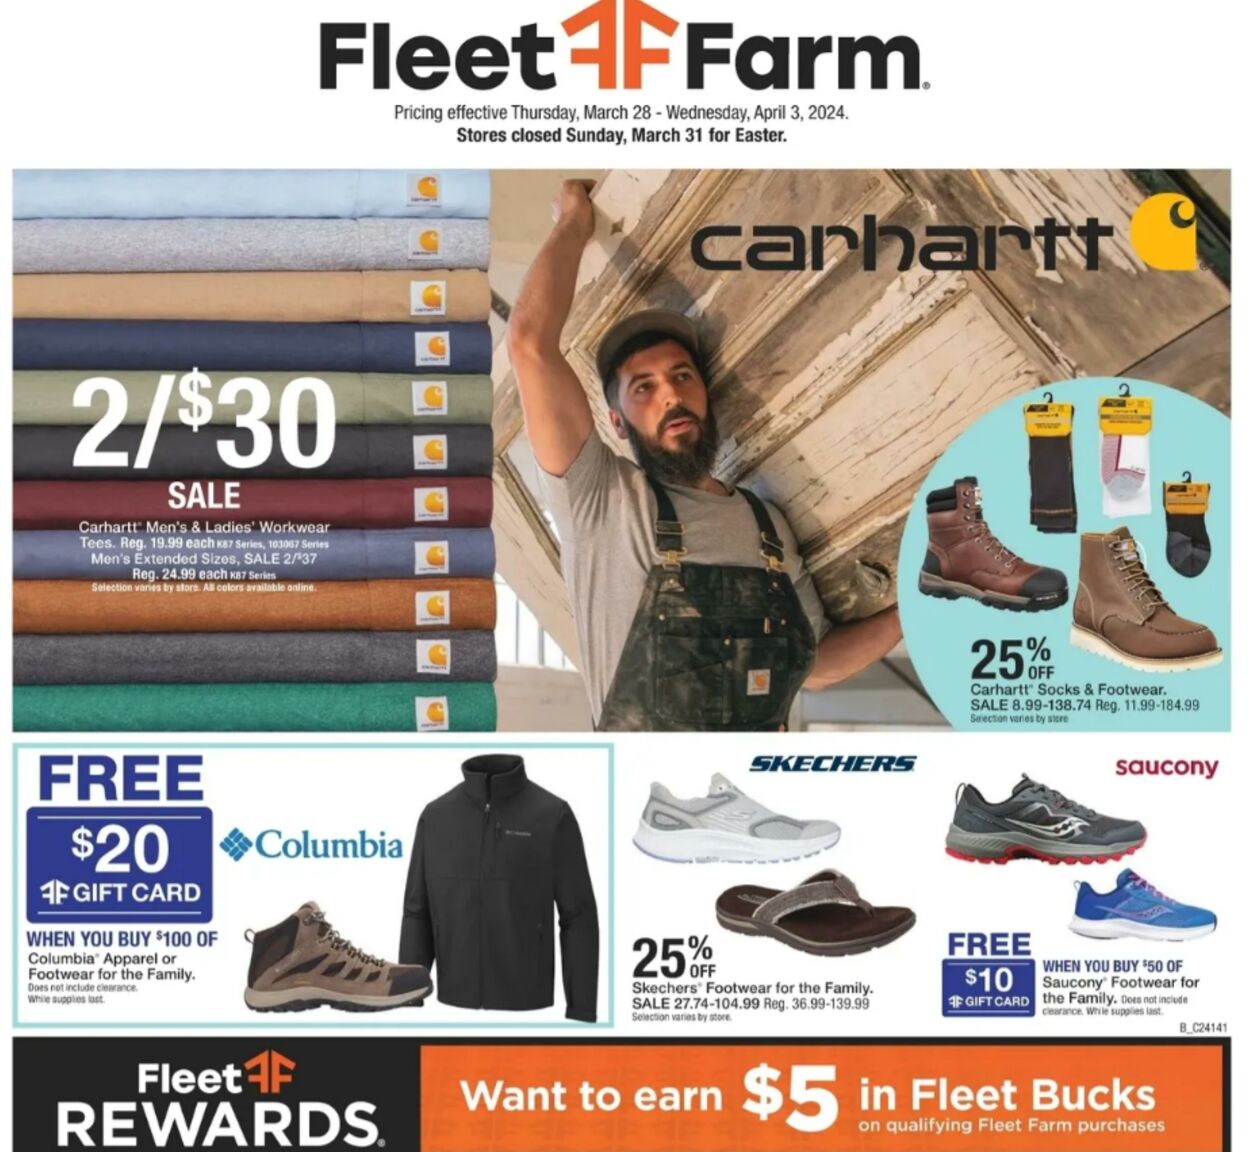 Mills Fleet Farm Promotional weekly ads